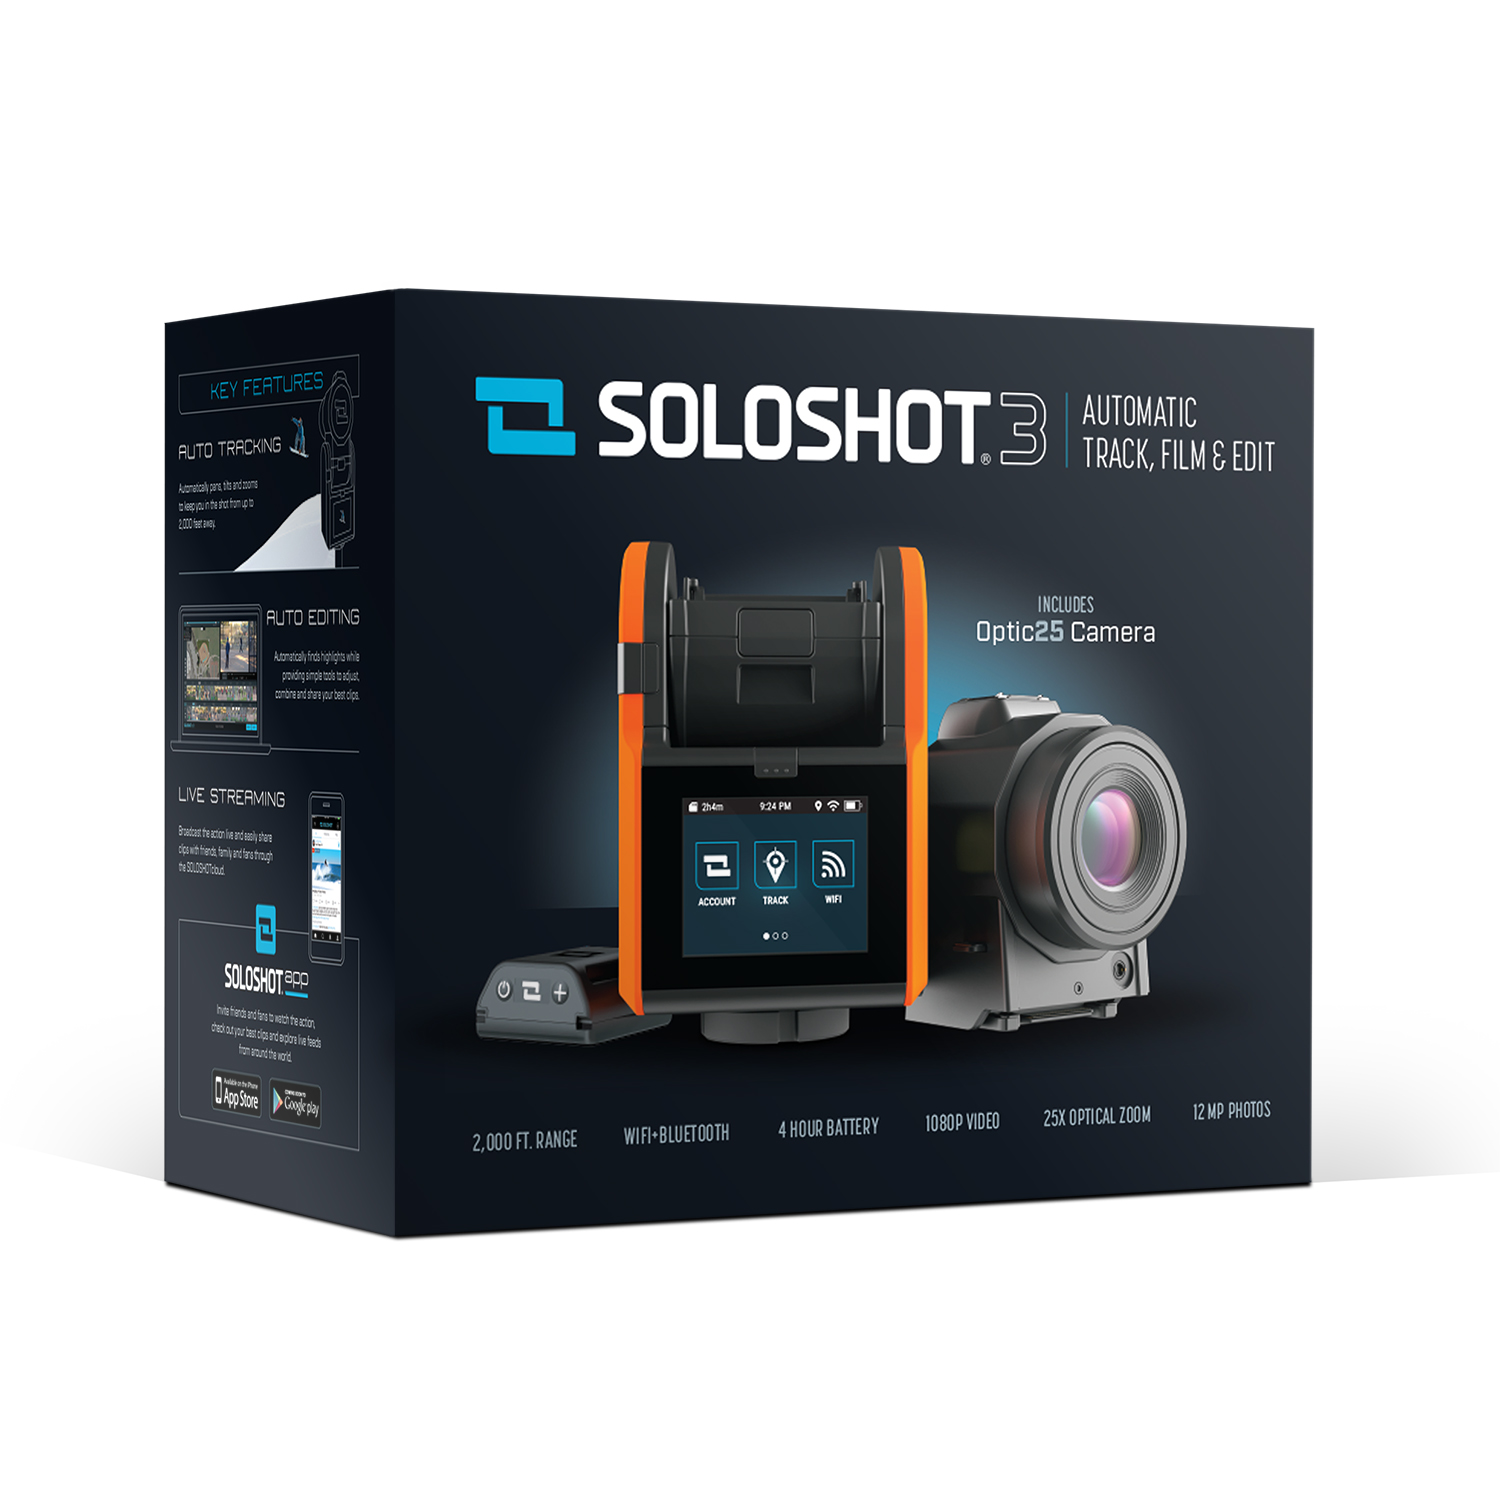 SOLOSHOT3 Optic25 カメラキット - SOLOSHOT3 自動追跡型ロボット 